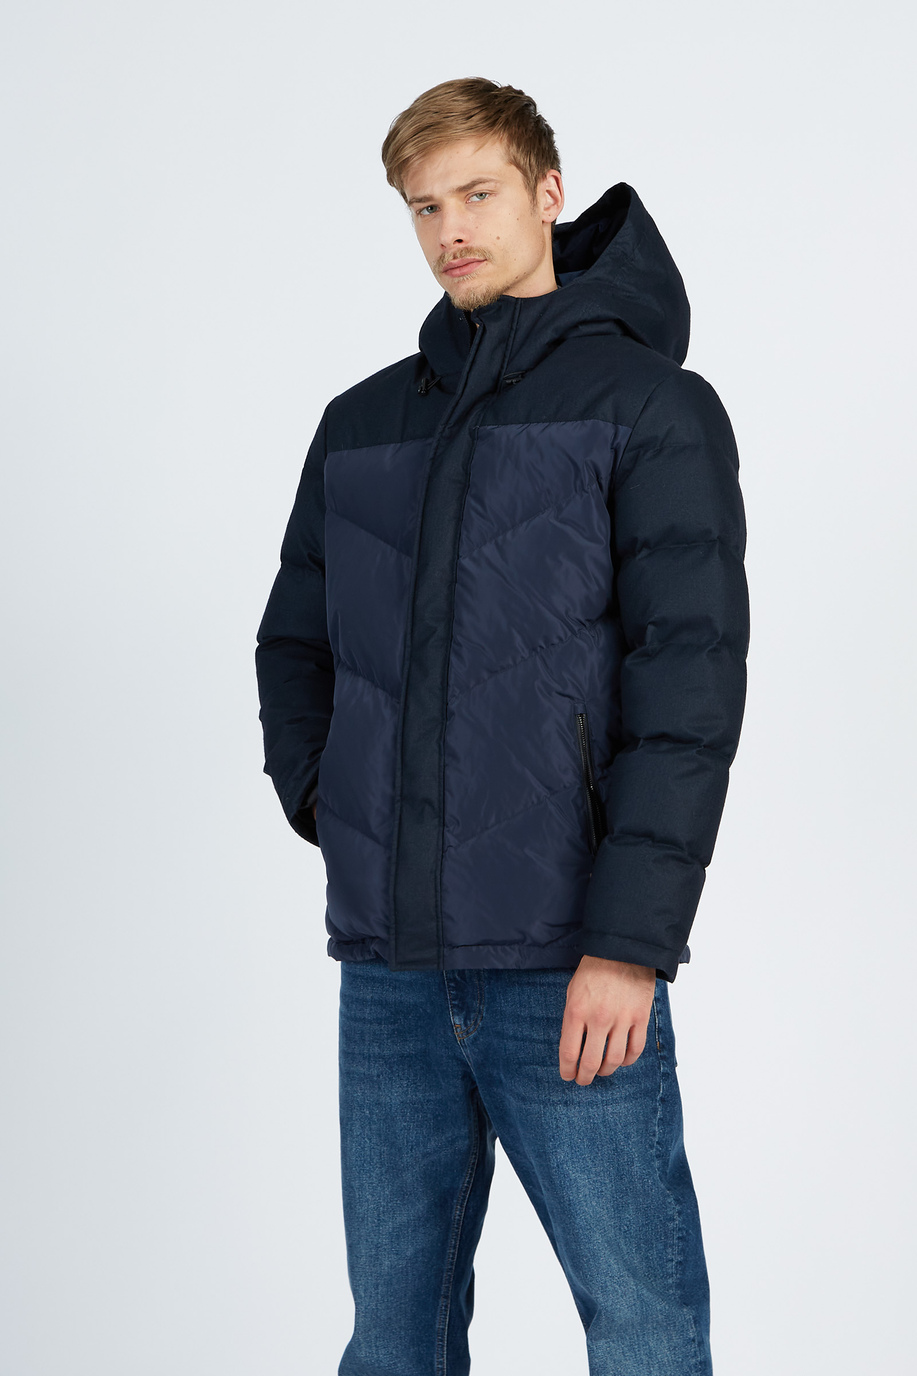 Men’s padded down jacket with hood regular fit model - Outerwear | La Martina - Official Online Shop